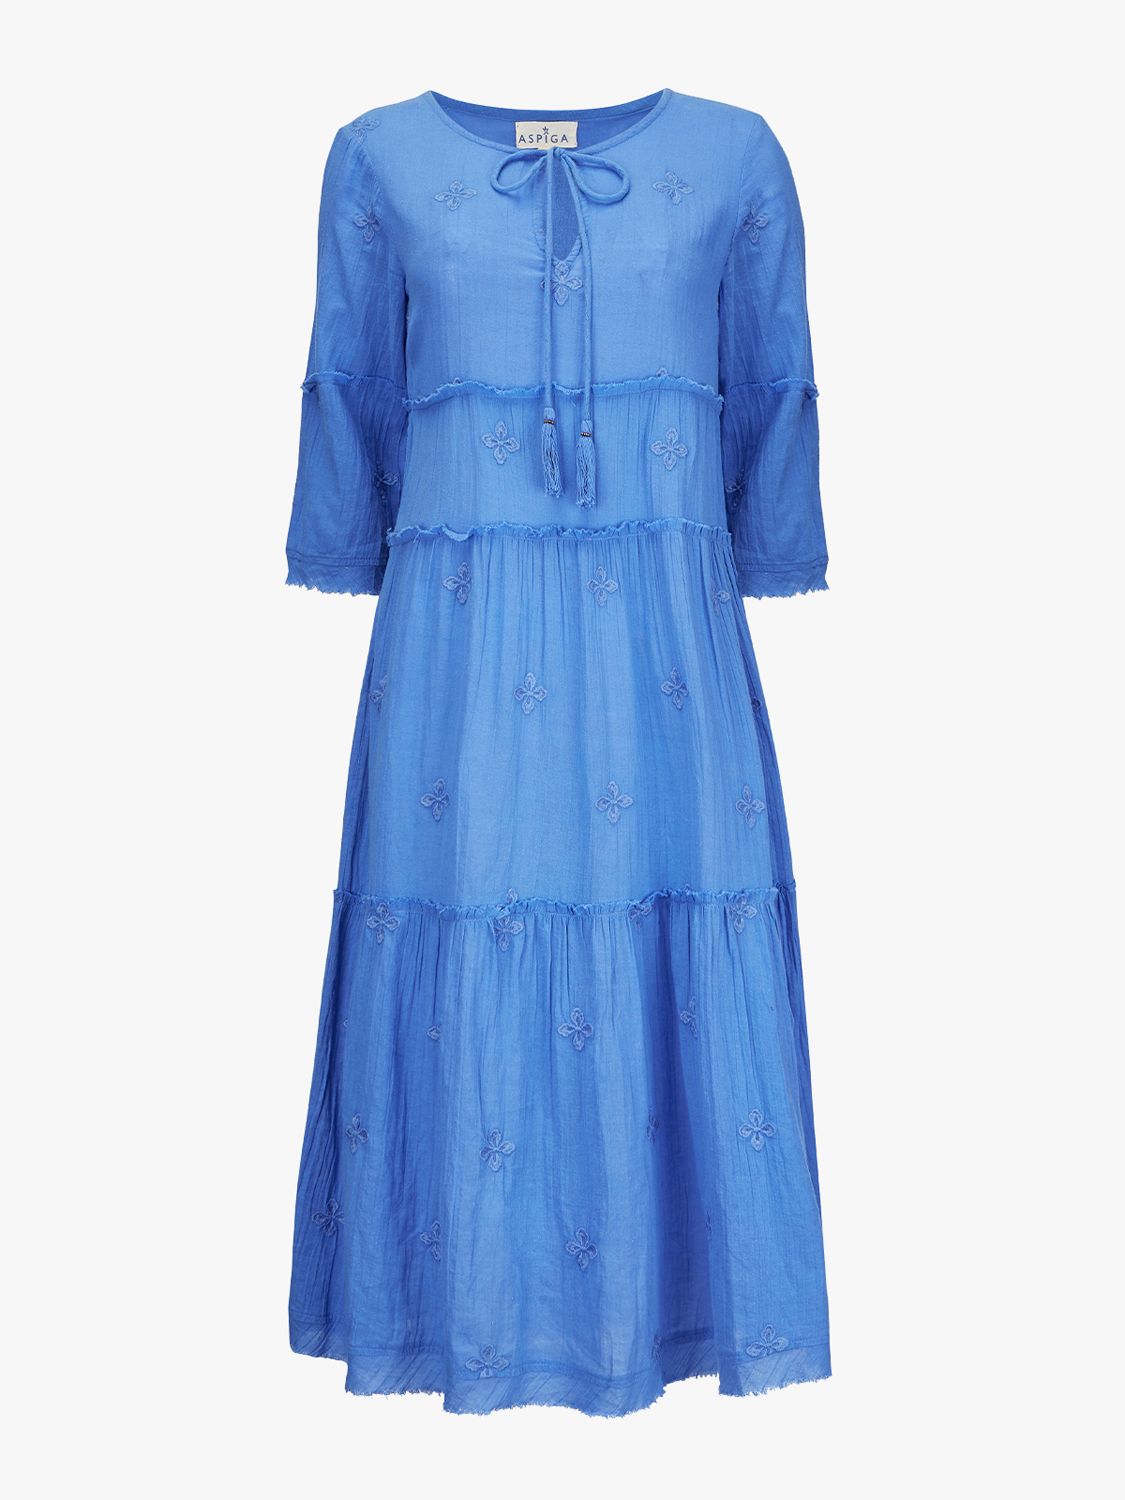 Aspiga Embroidered Boho Dress, Marina Blue at John Lewis & Partners